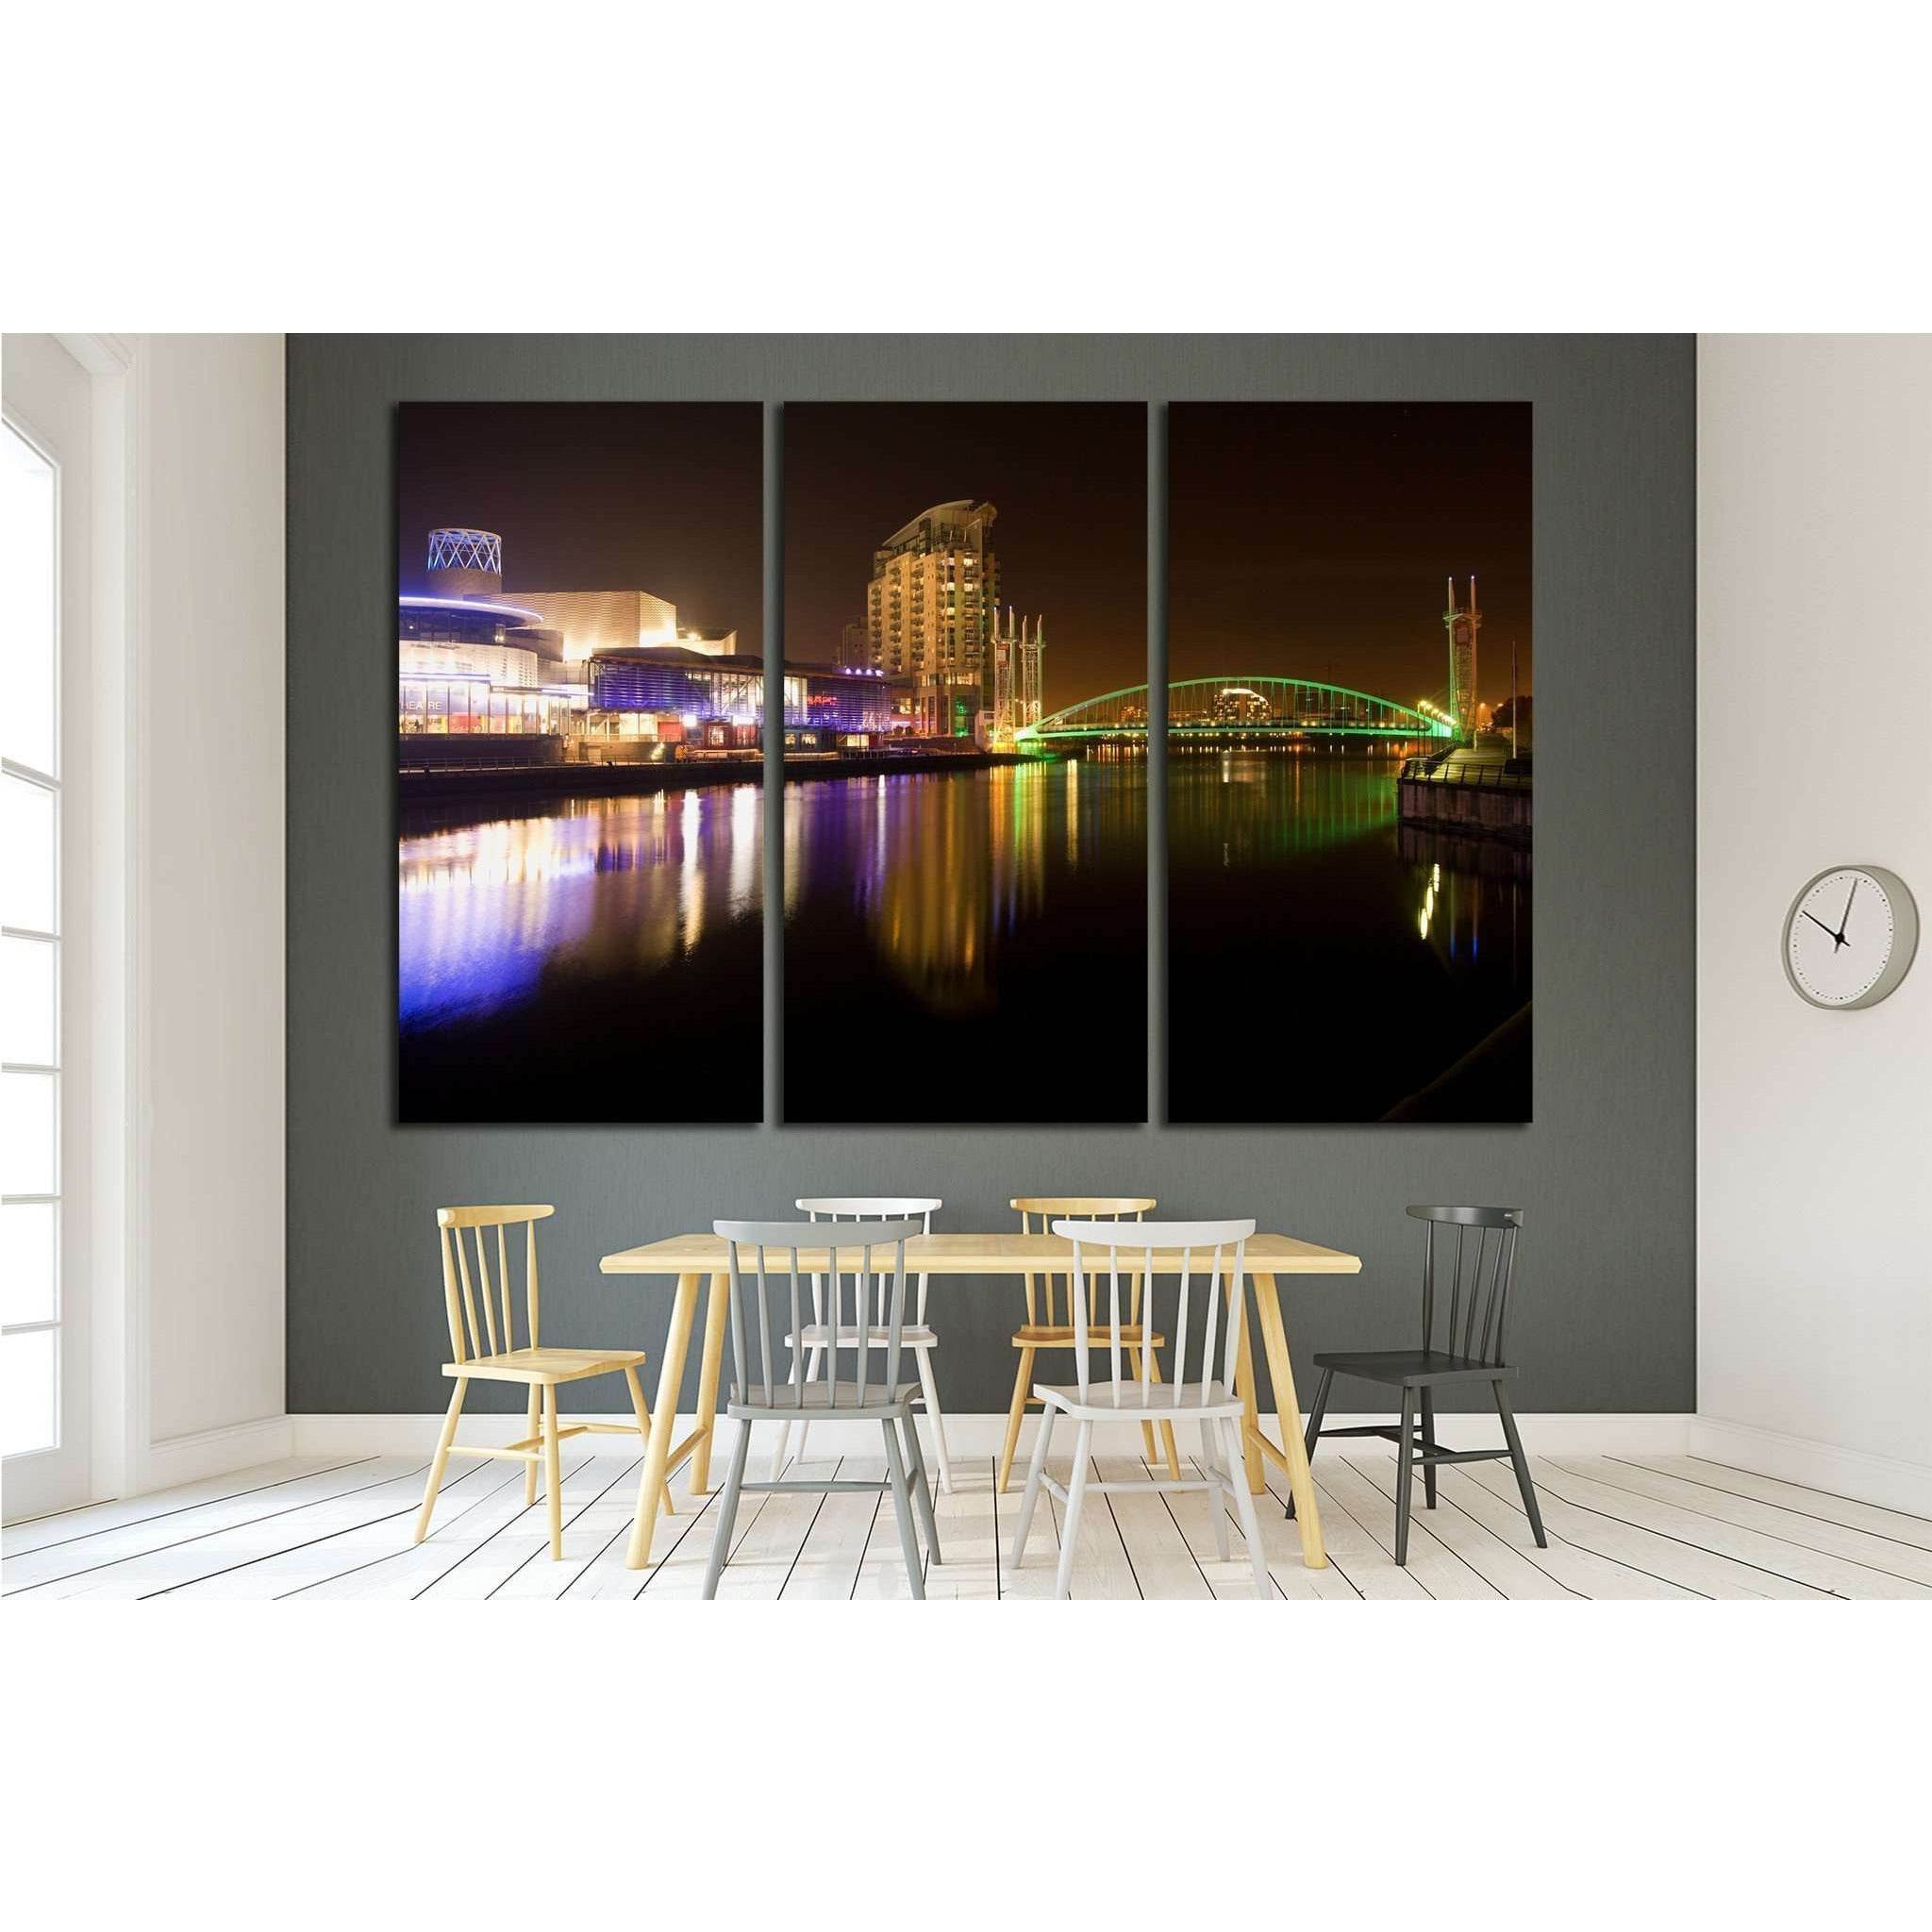 Salford quays and MediaCity at night, millennium lift bridge, Manchester city, United Kingdom №2094 Ready to Hang Canvas Print